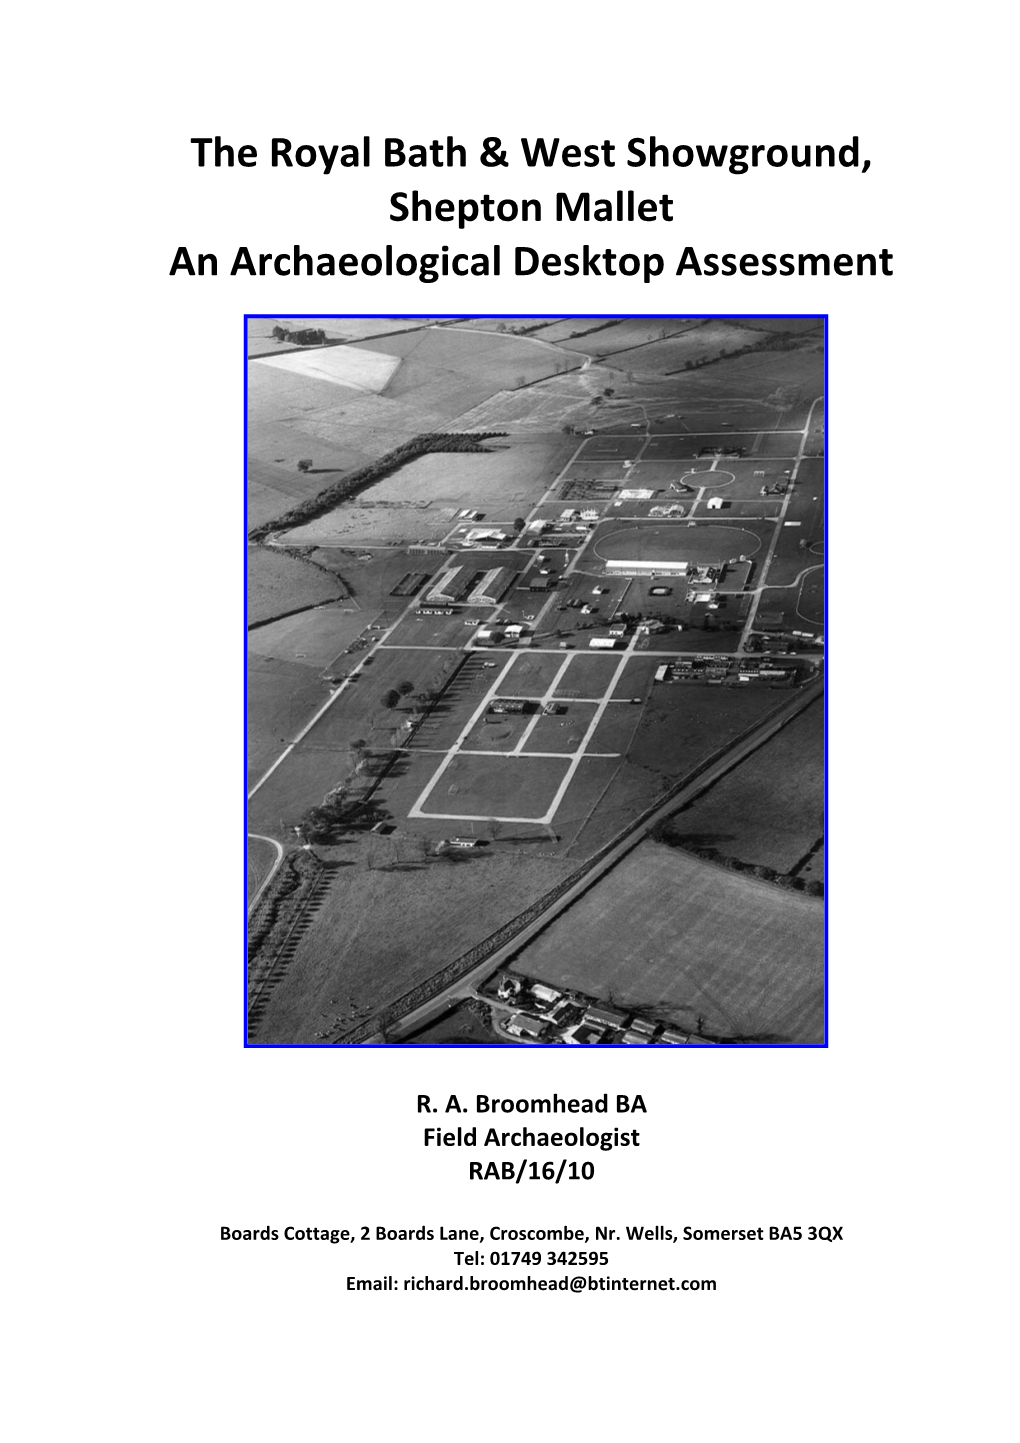 Archaeology Desktop Assessment